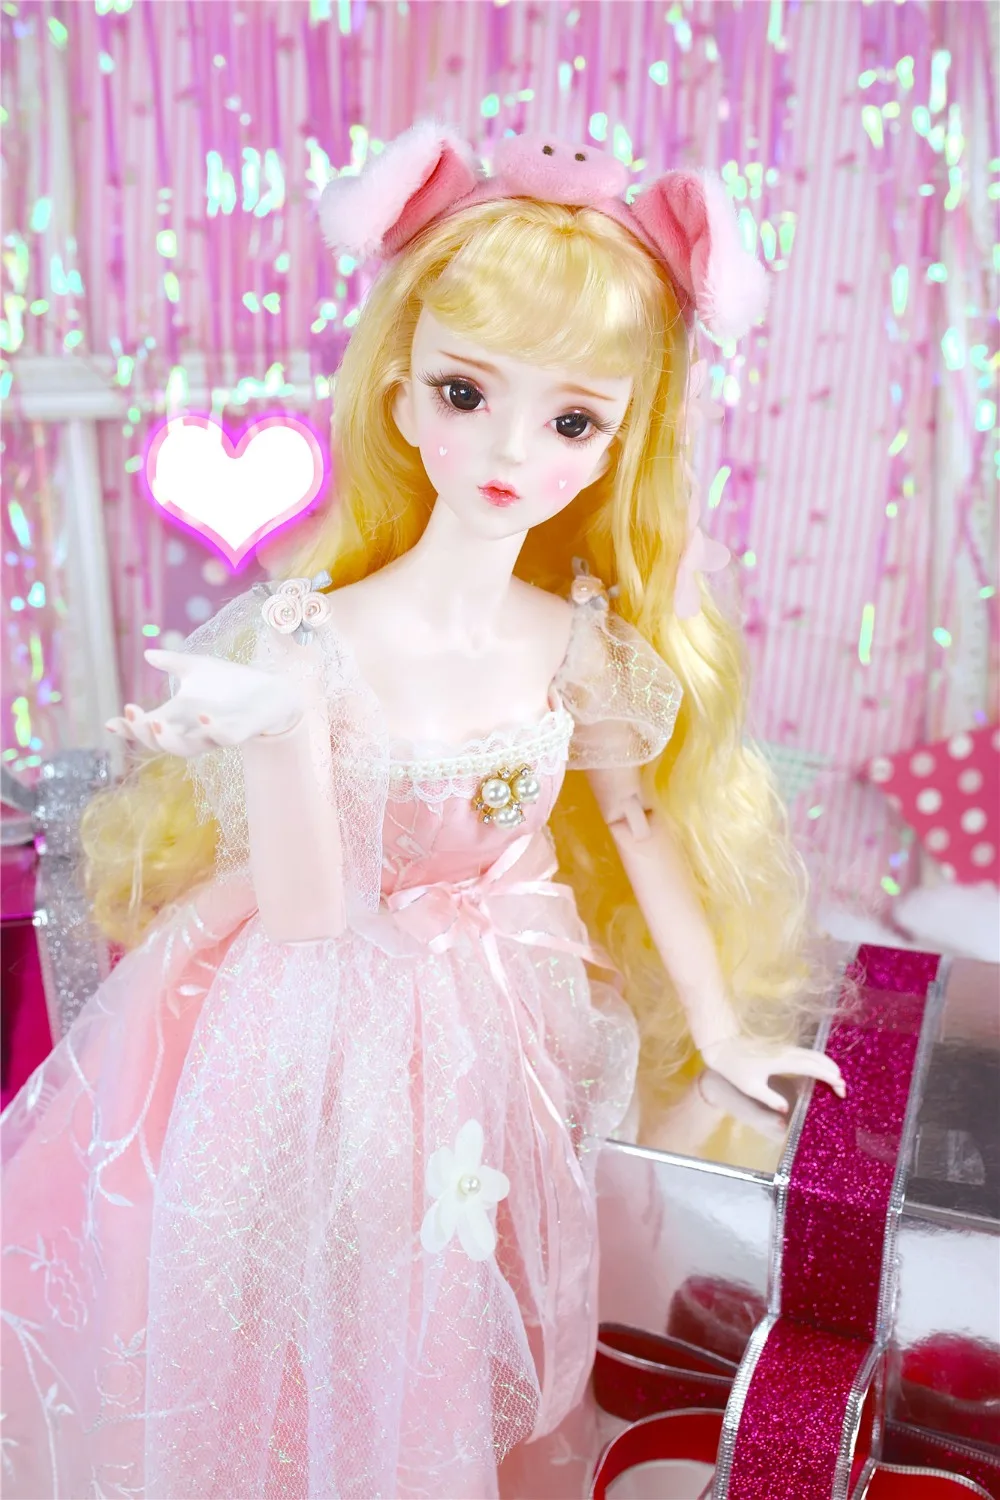 Dream Fairy 1/3 bjd кукла 62 см свинка девочка кукла с наряд обувь, AI YoSD MSD SD комплект игрушка подарок для ребенка DC лати